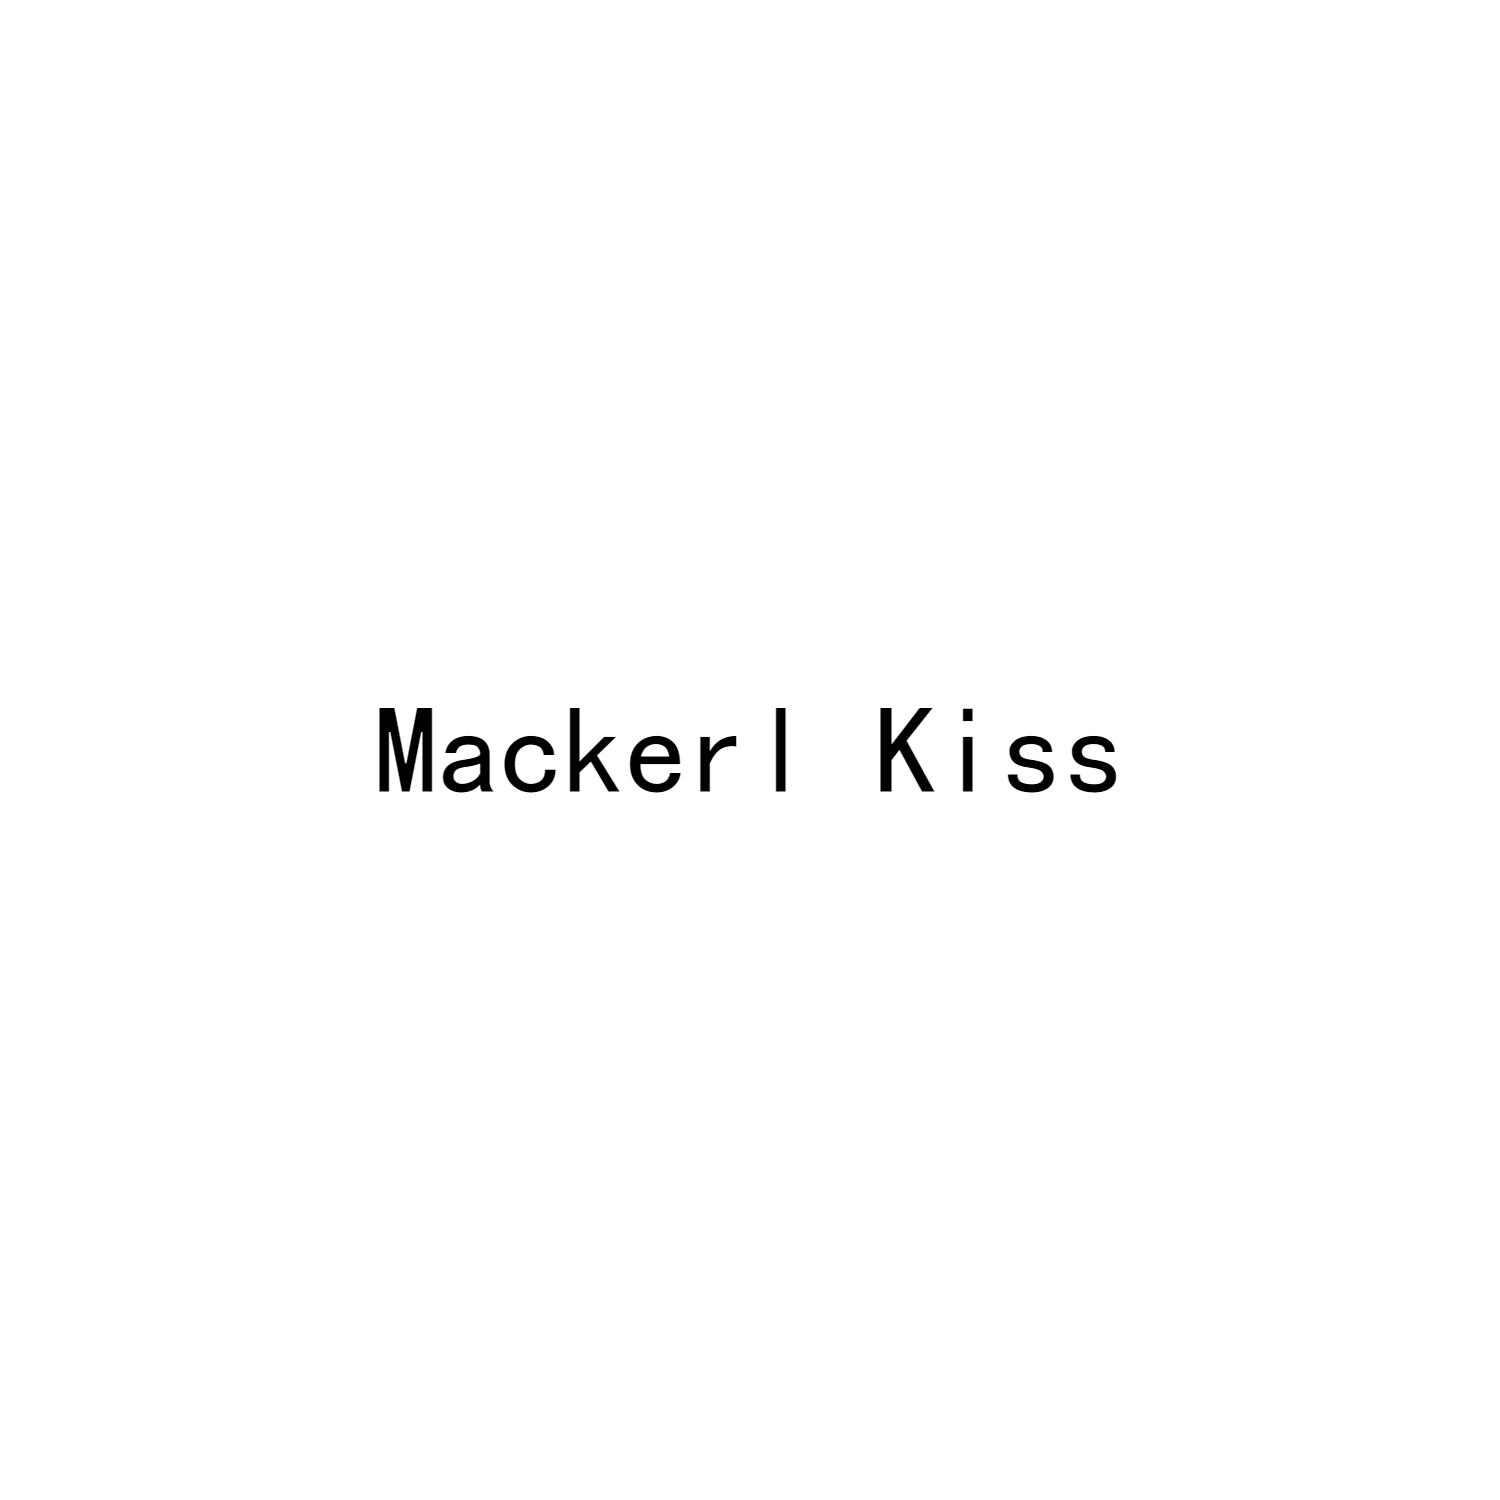 MACKERL KISS商标转让